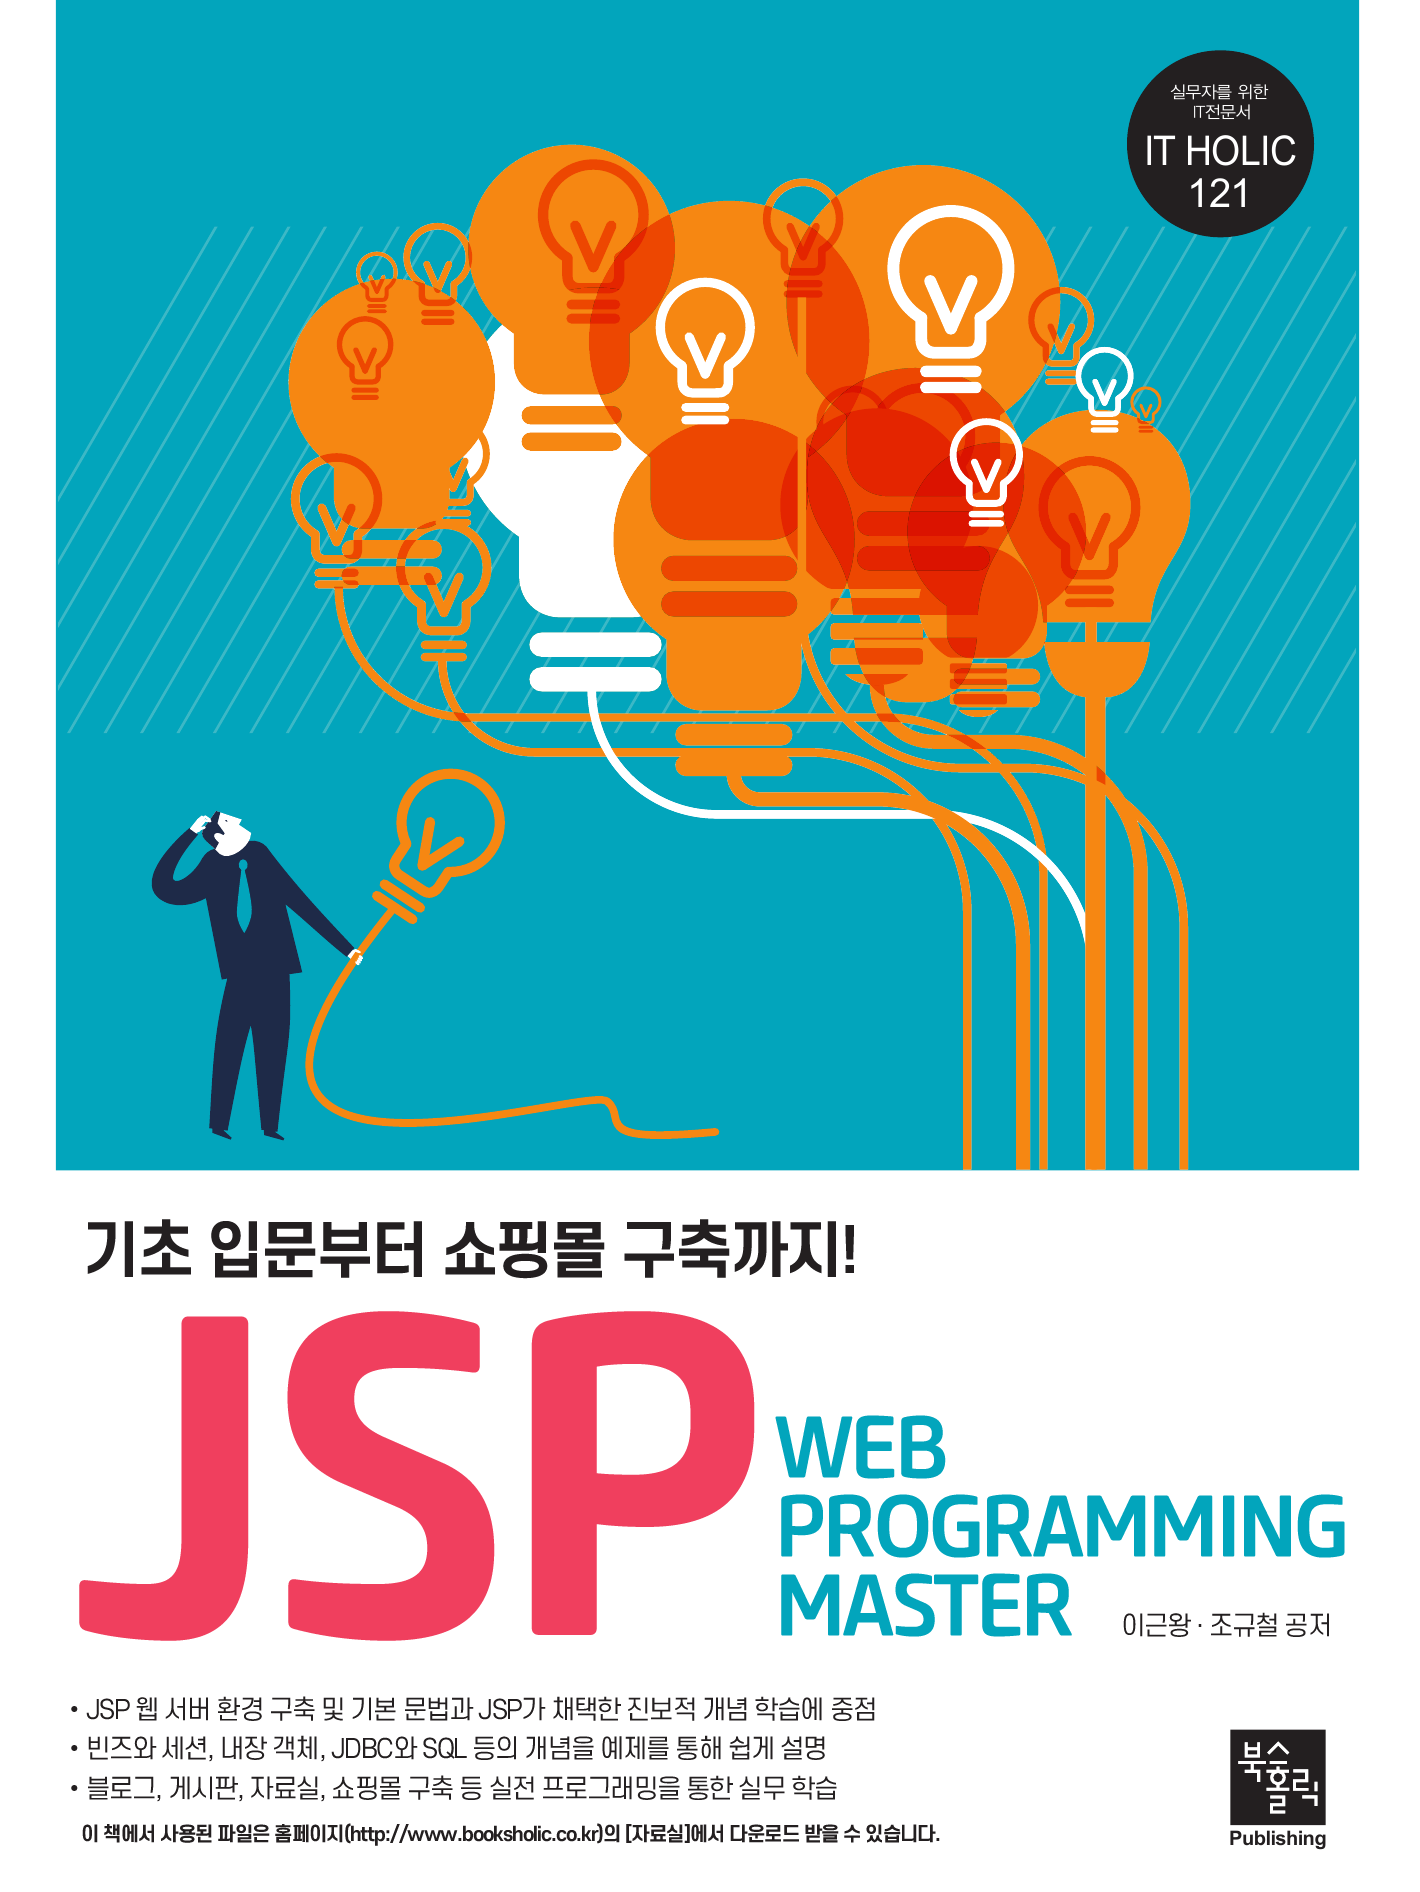 JSP Web Programming Master 기초 입문부터 쇼핑몰 구축까지!